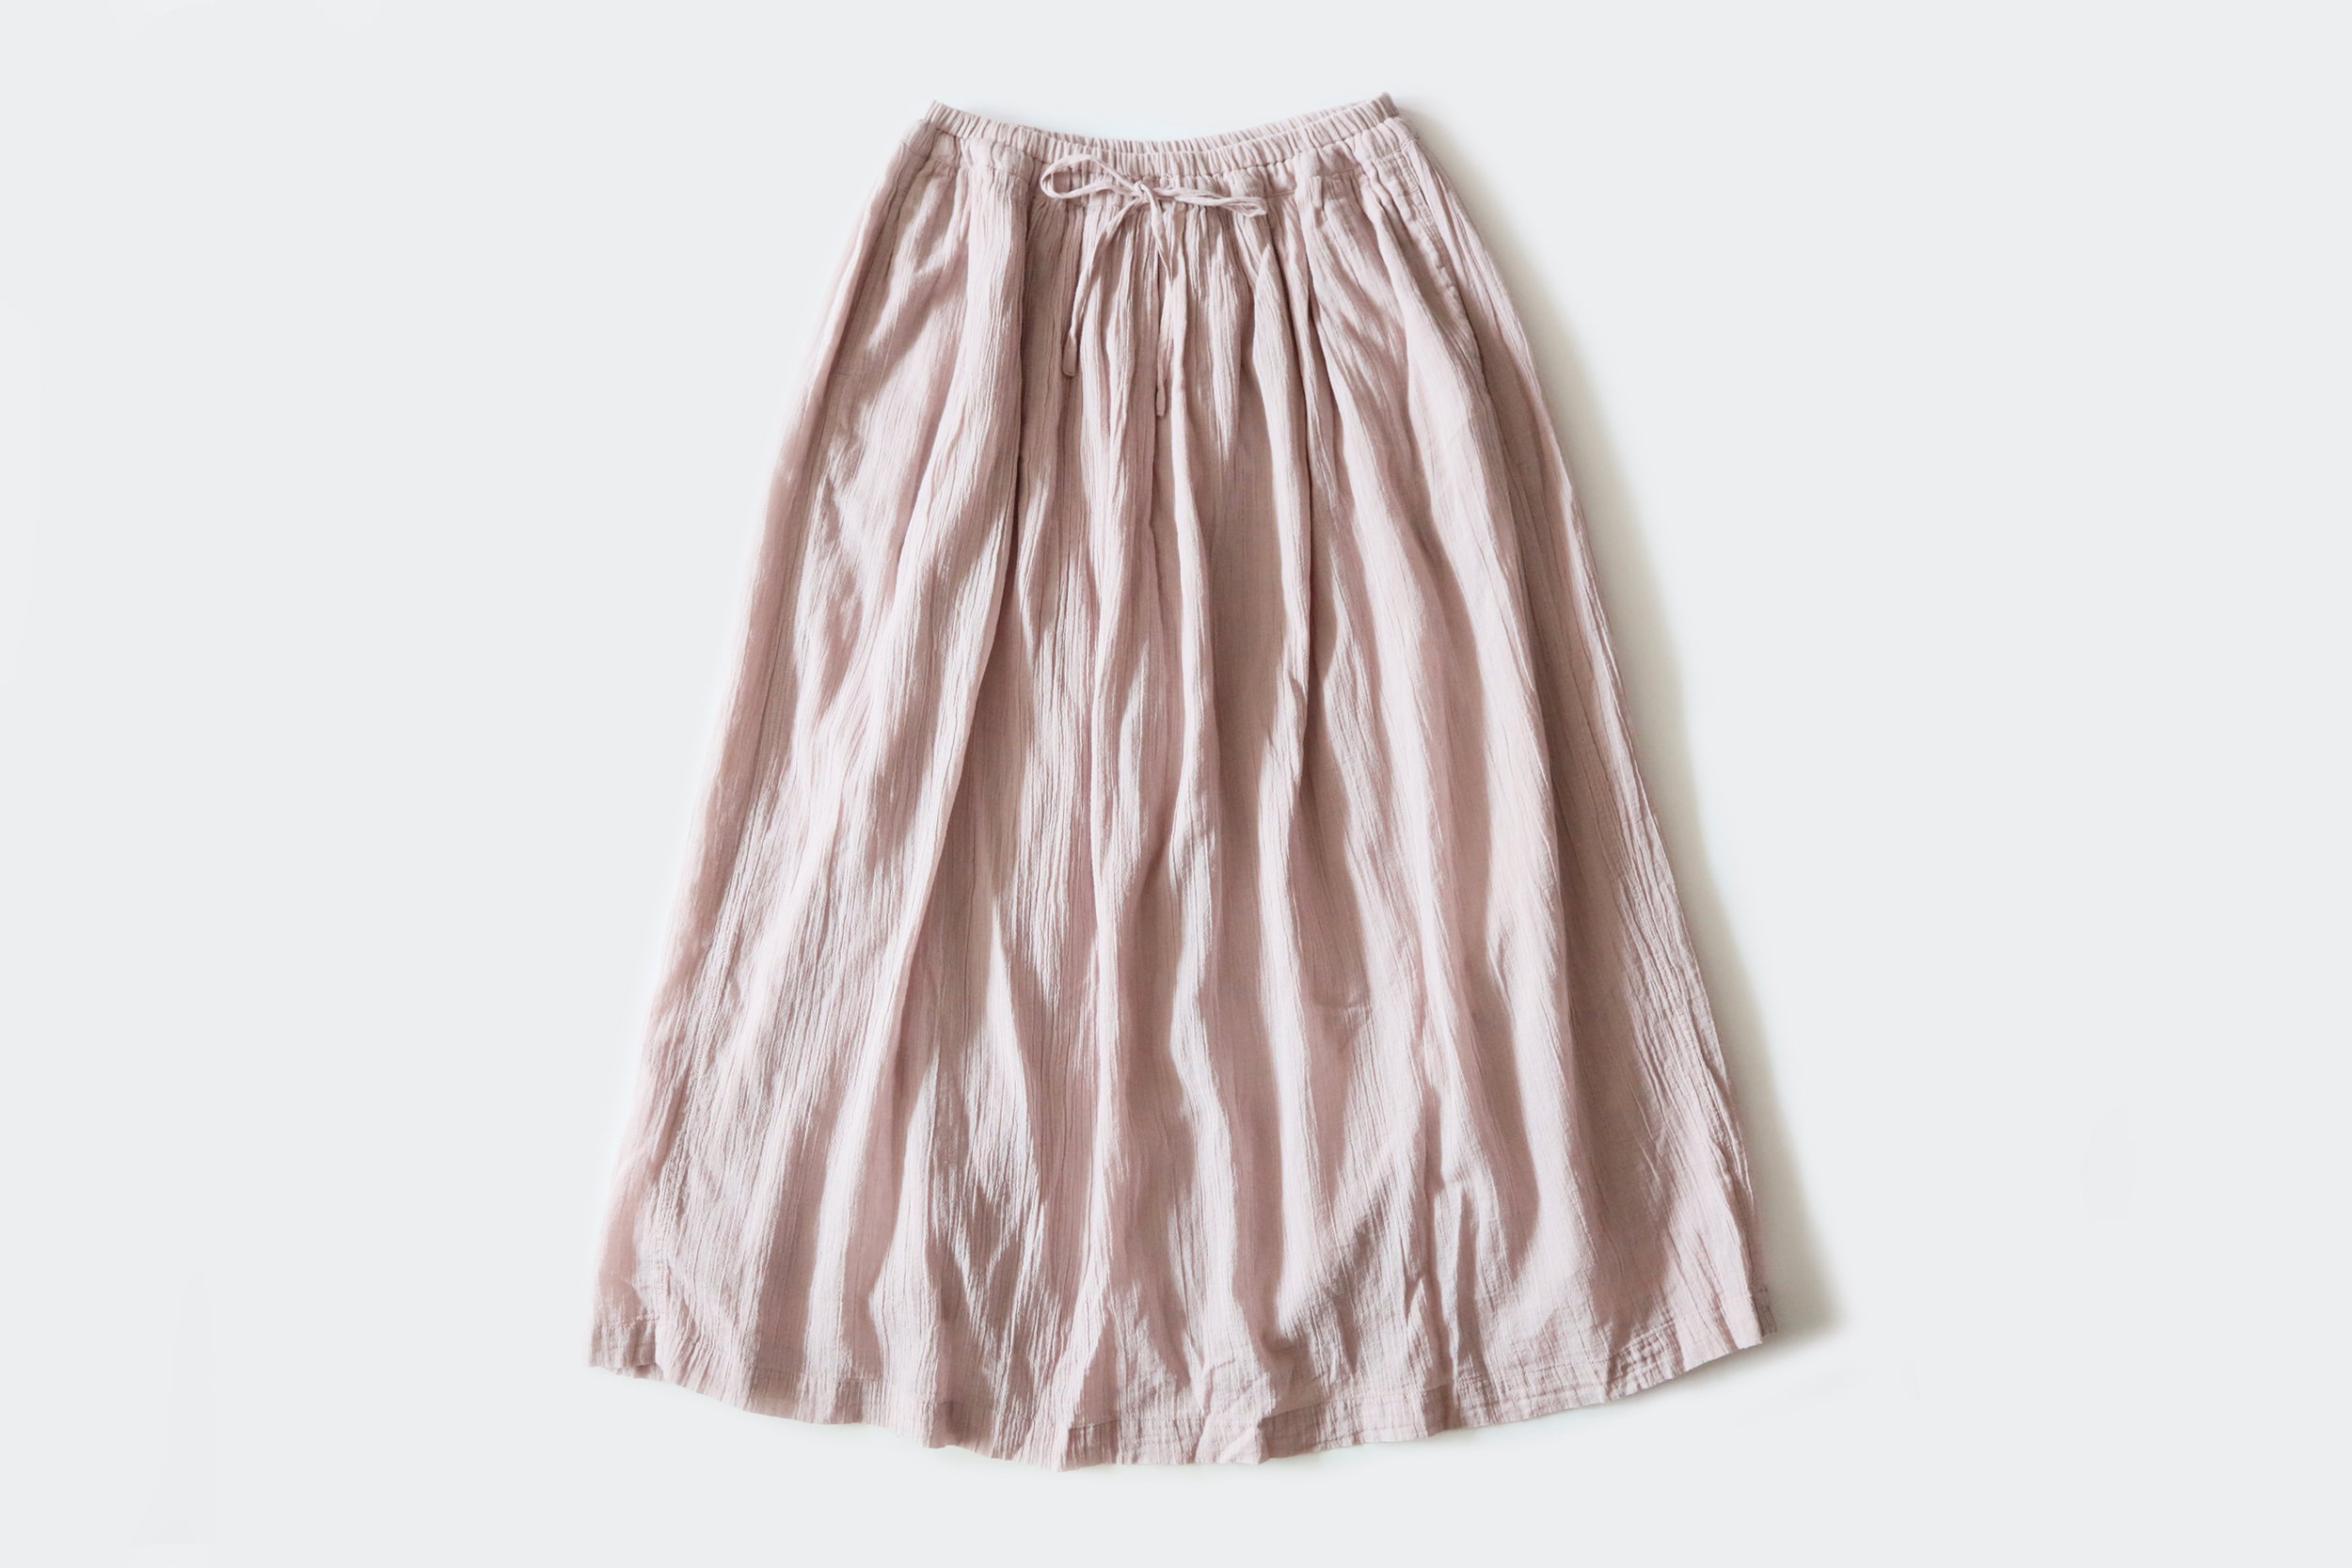 ARMEN  Cotton gauze gathered skirt